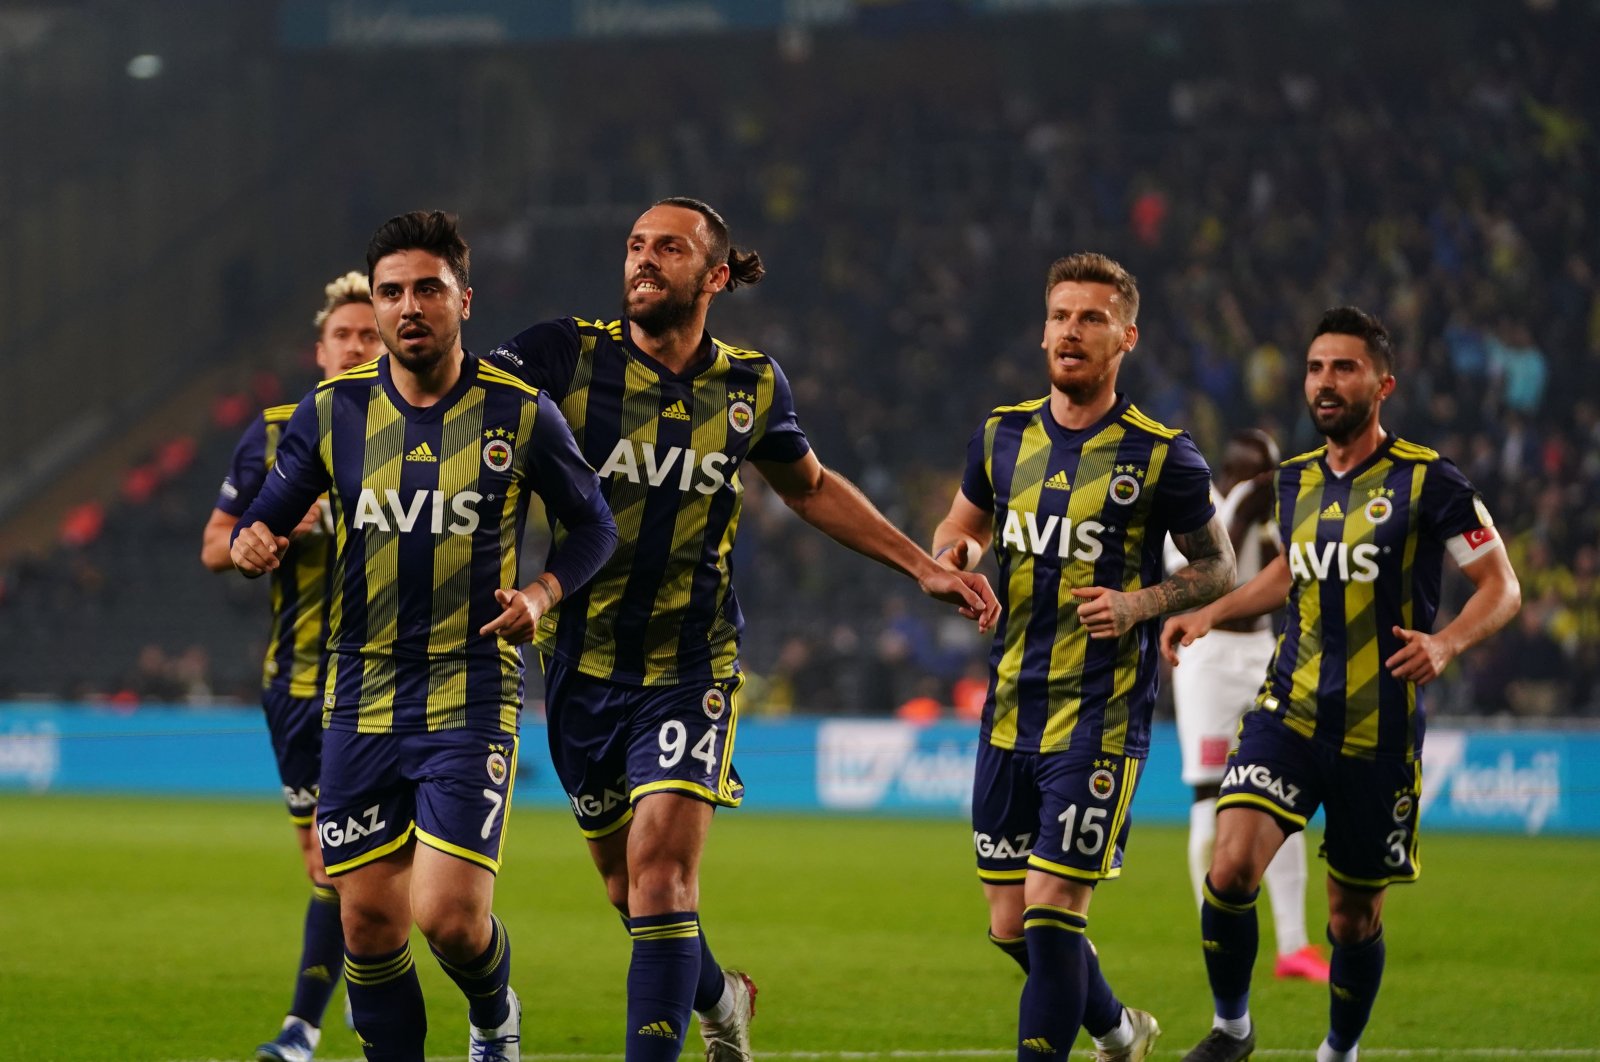 Fenerbahçe players celebrate a goal during a Süper Lig match against Denizlispor, Istanbul, Turkey, March 10, 2020. (İHA Photo)